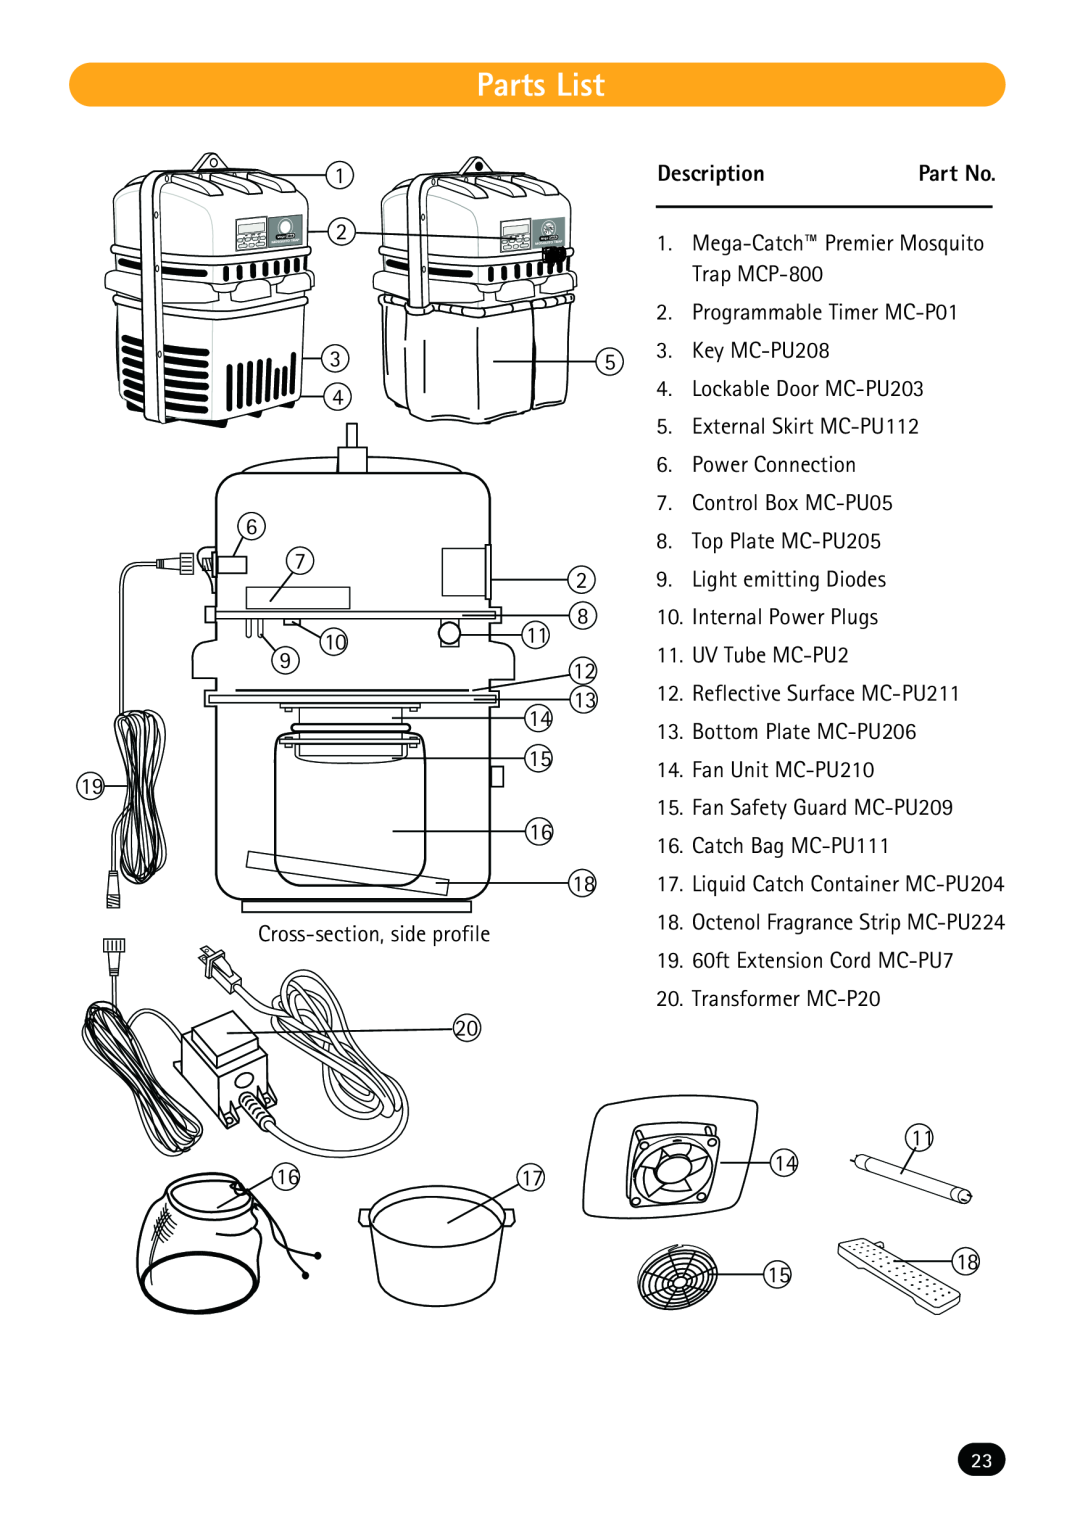 Mega Catch MCP800 operation manual Parts List, Description 